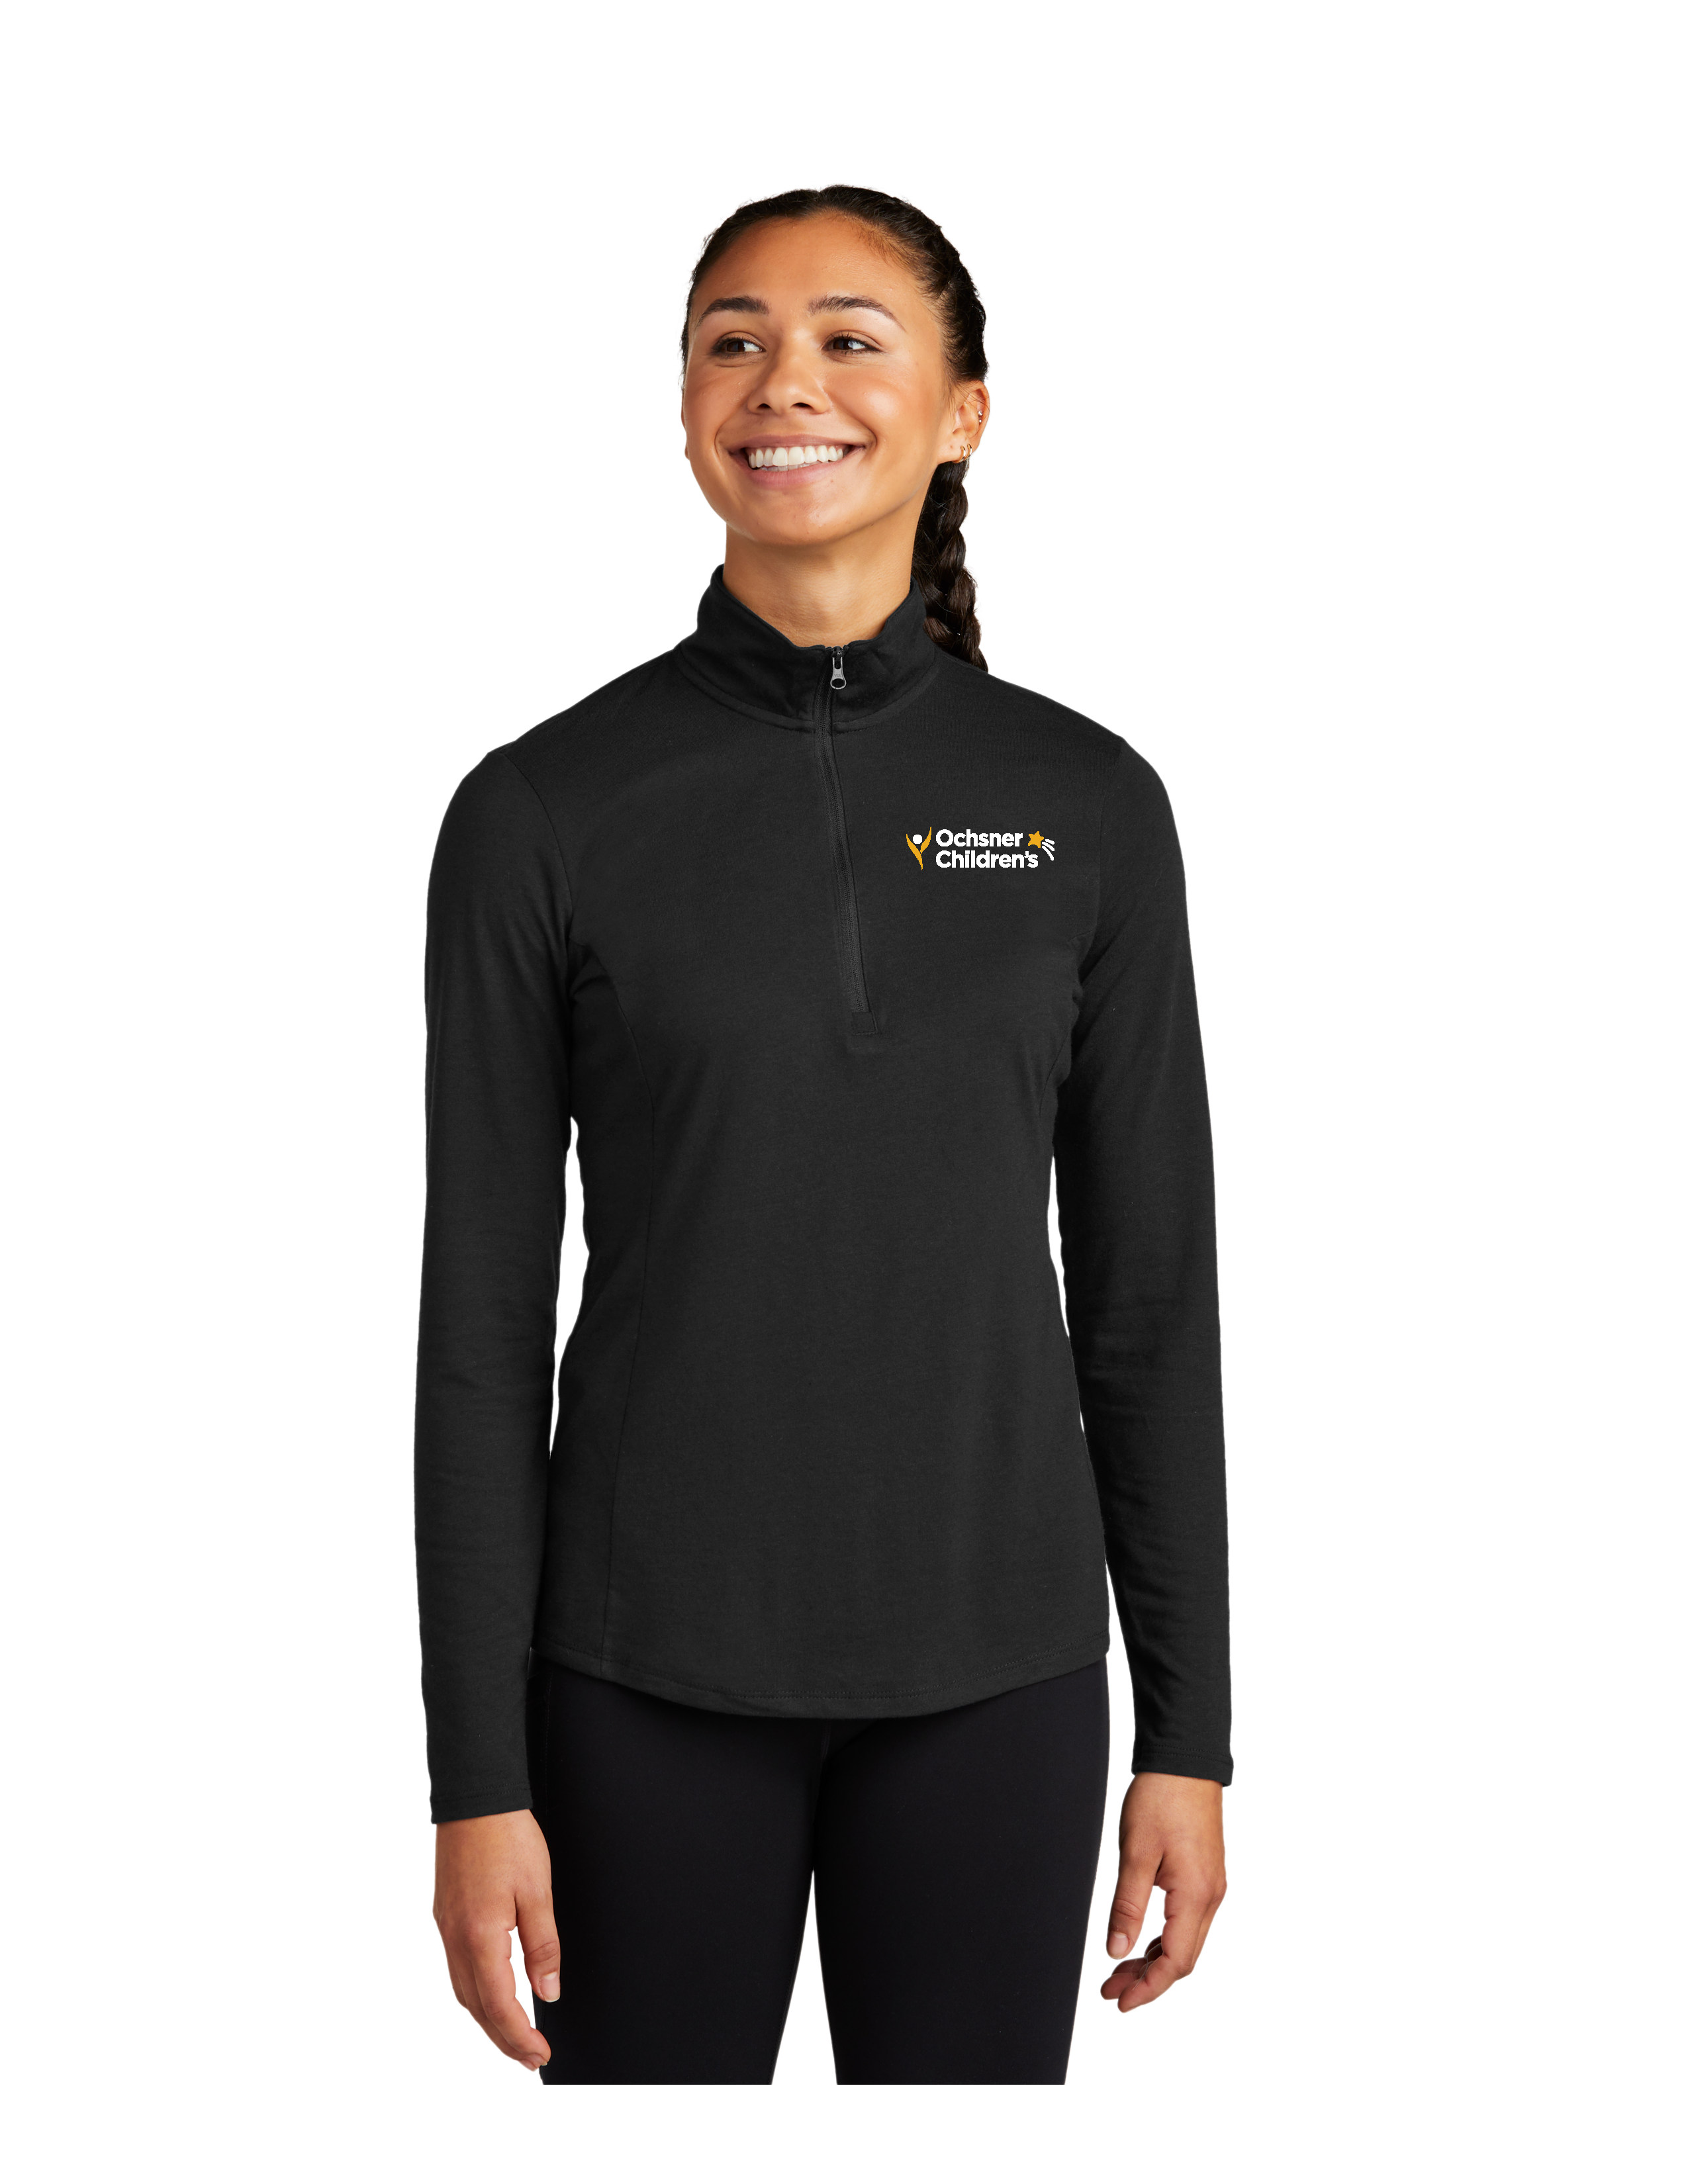 Ochsner Children's Sport-Tek Ladies 1/4 Zip Pullover, Black, large image number 1